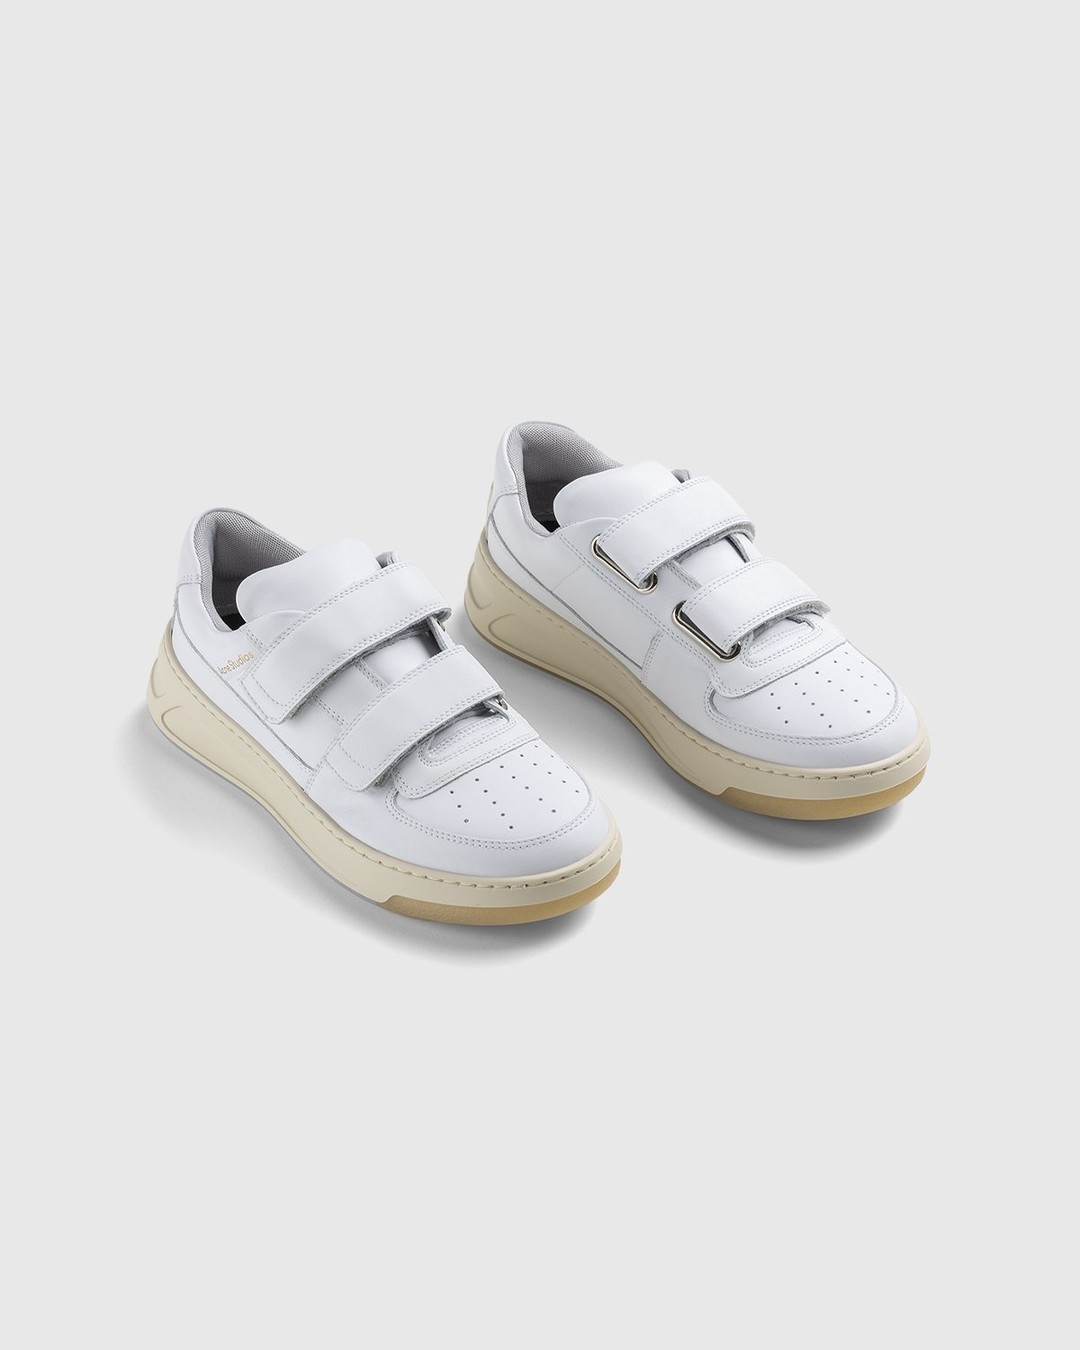 Acne Studios – Perey Velcro Strap Sneakers White - Low Top Sneakers - White - Image 3